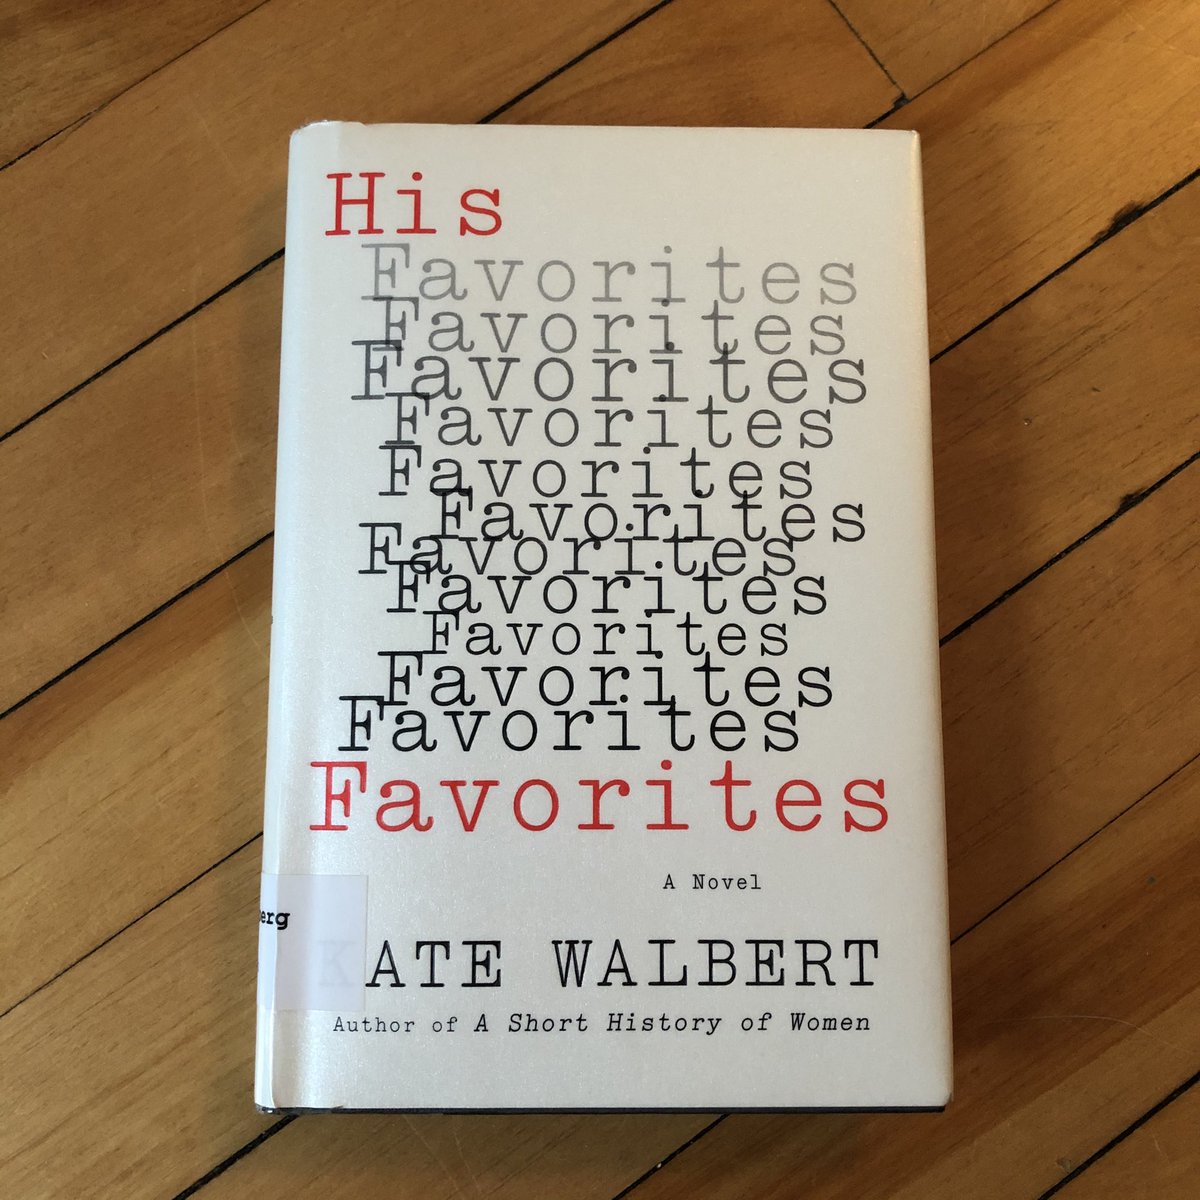 3/52His Favorites by Kate Walbert.  #52booksin52weeks  #2020books  #booksof2020